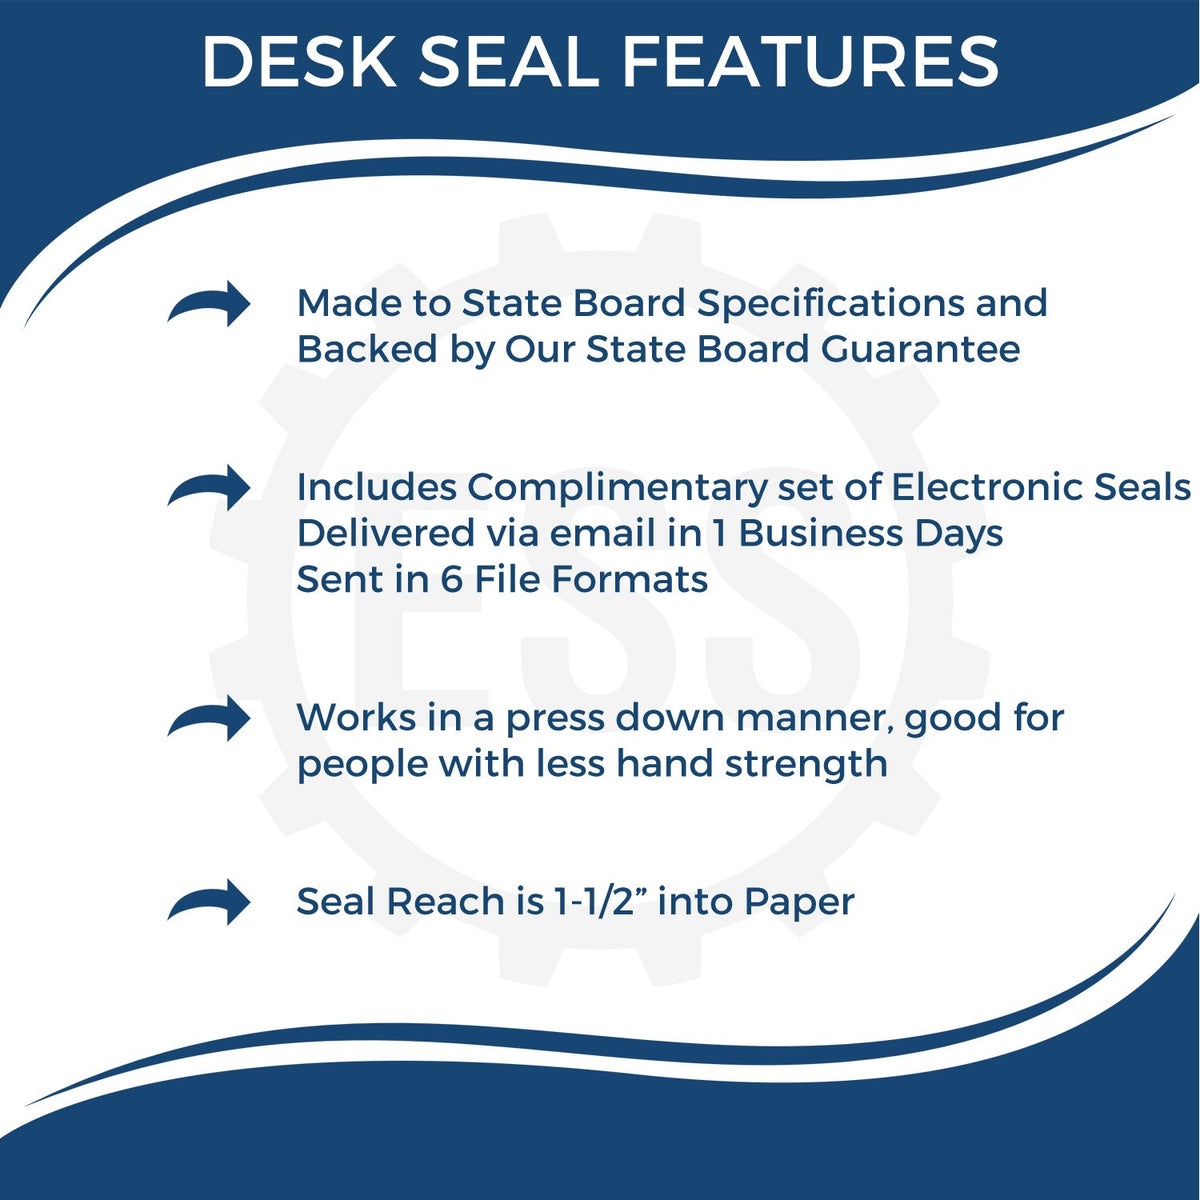 South Carolina Engineer Desk Seal